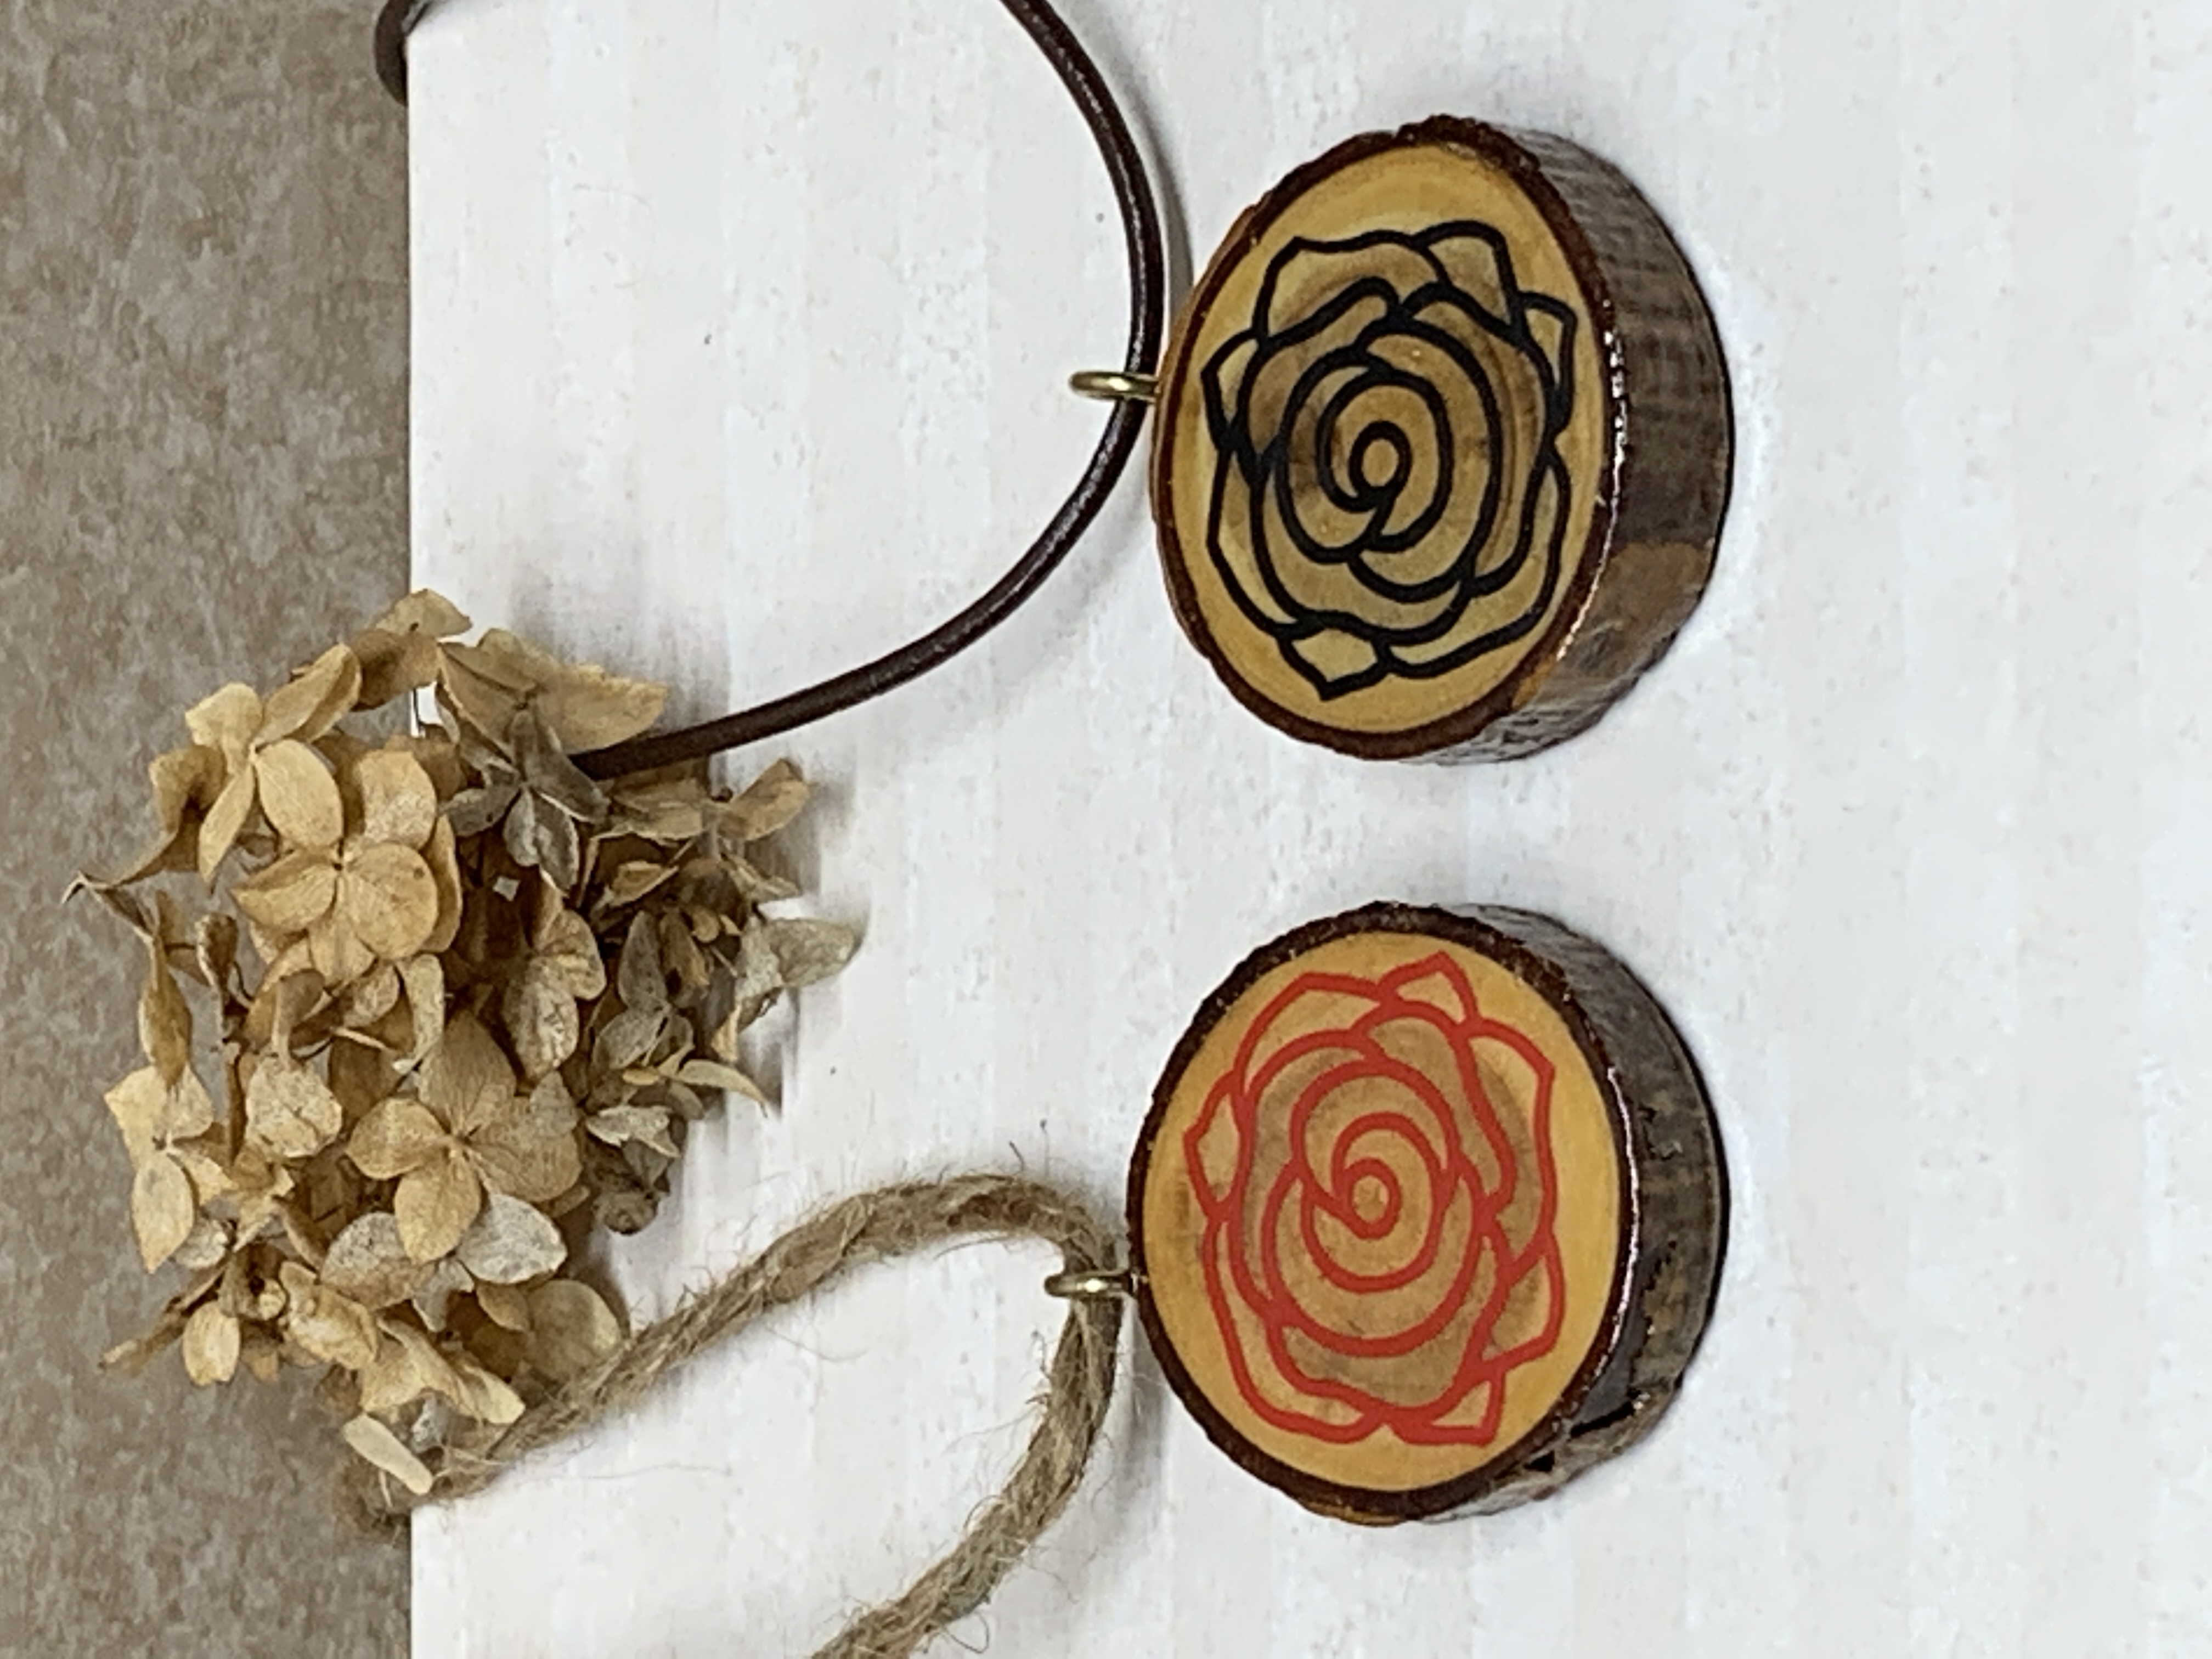 Red Rose / Black Rose 2 in 1 Wood Necklace